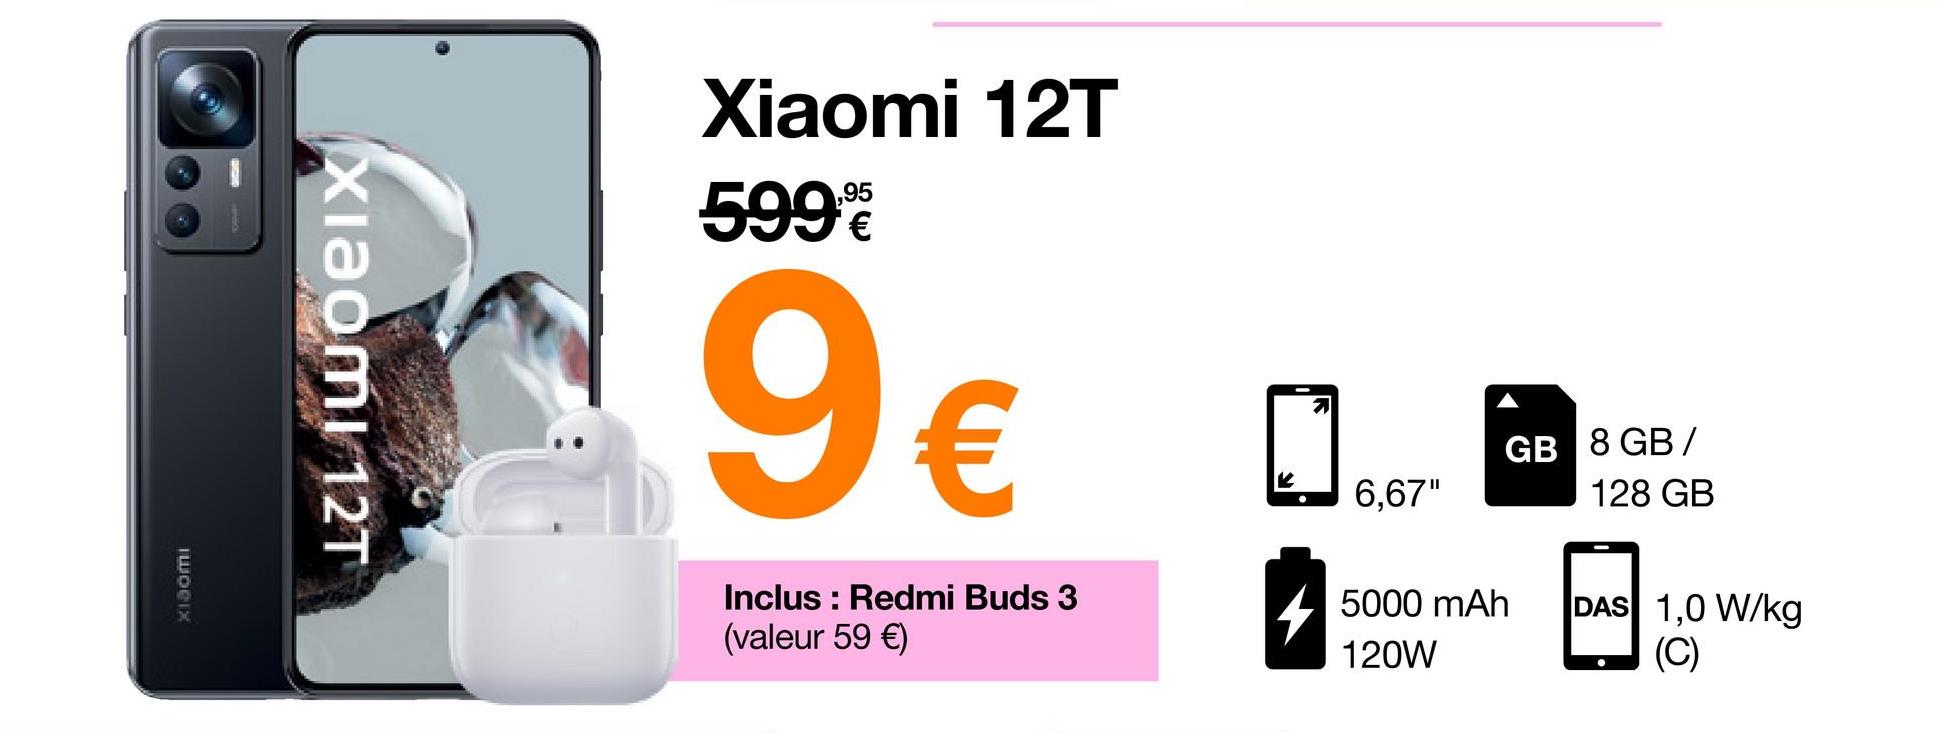 шосх
Xiaomi 12T
Xiaomi 12T
599%
9€
Inclus : Redmi Buds 3
(valeur 59 €)
K
6,67"
GB 8 GB /
128 GB
5000 mAh
120W
DAS 1,0 W/kg
(C)